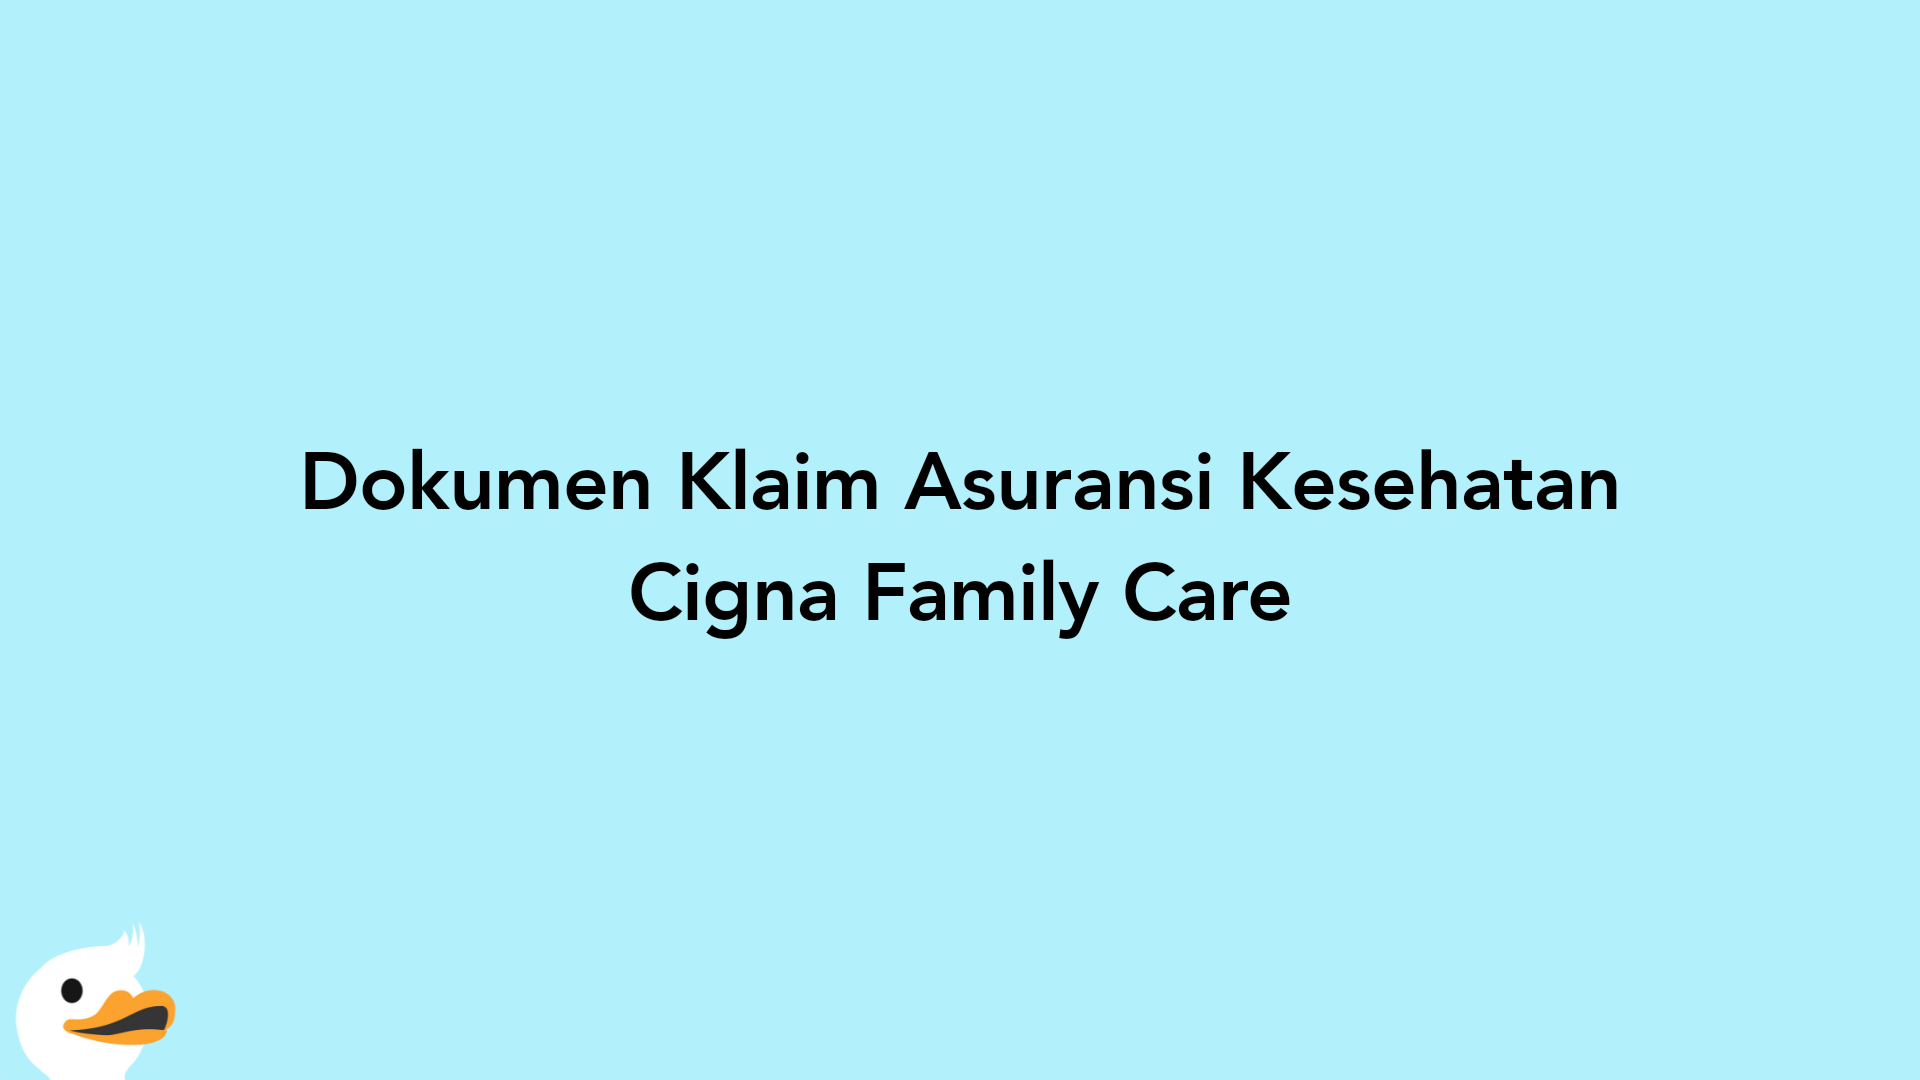 Dokumen Klaim Asuransi Kesehatan Cigna Family Care